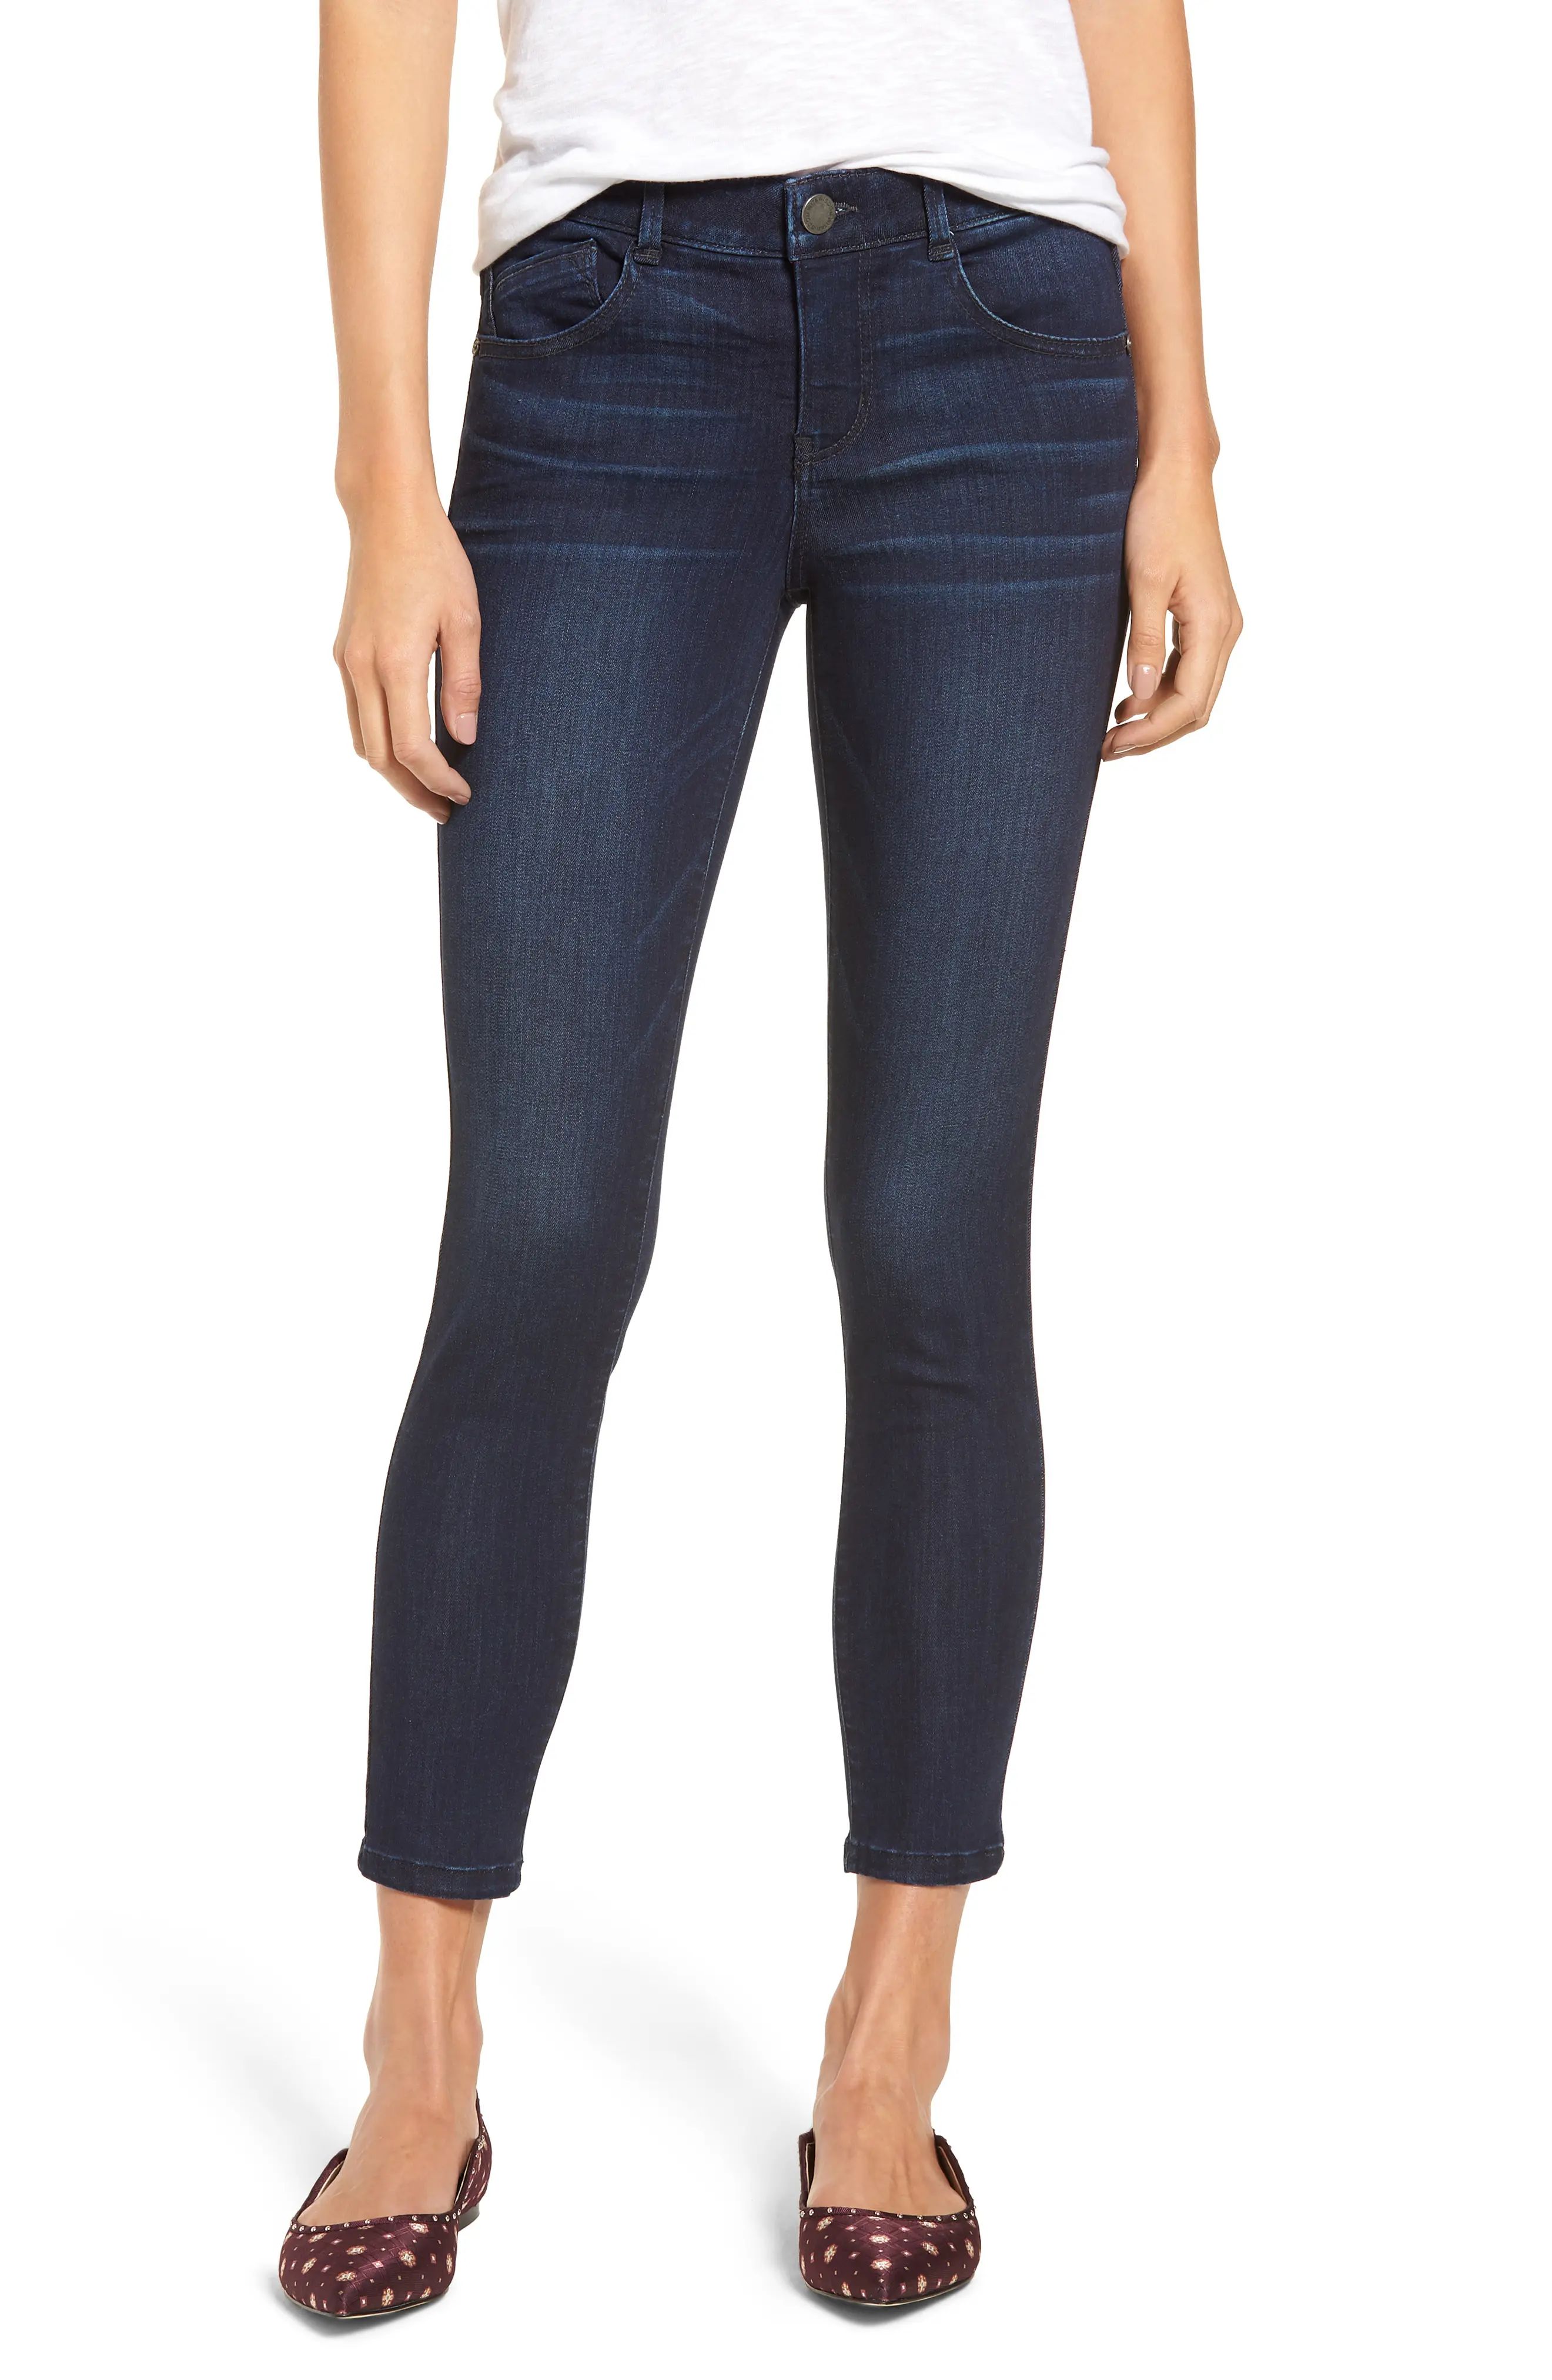 Ab-solution Skinny Jeans | Nordstrom